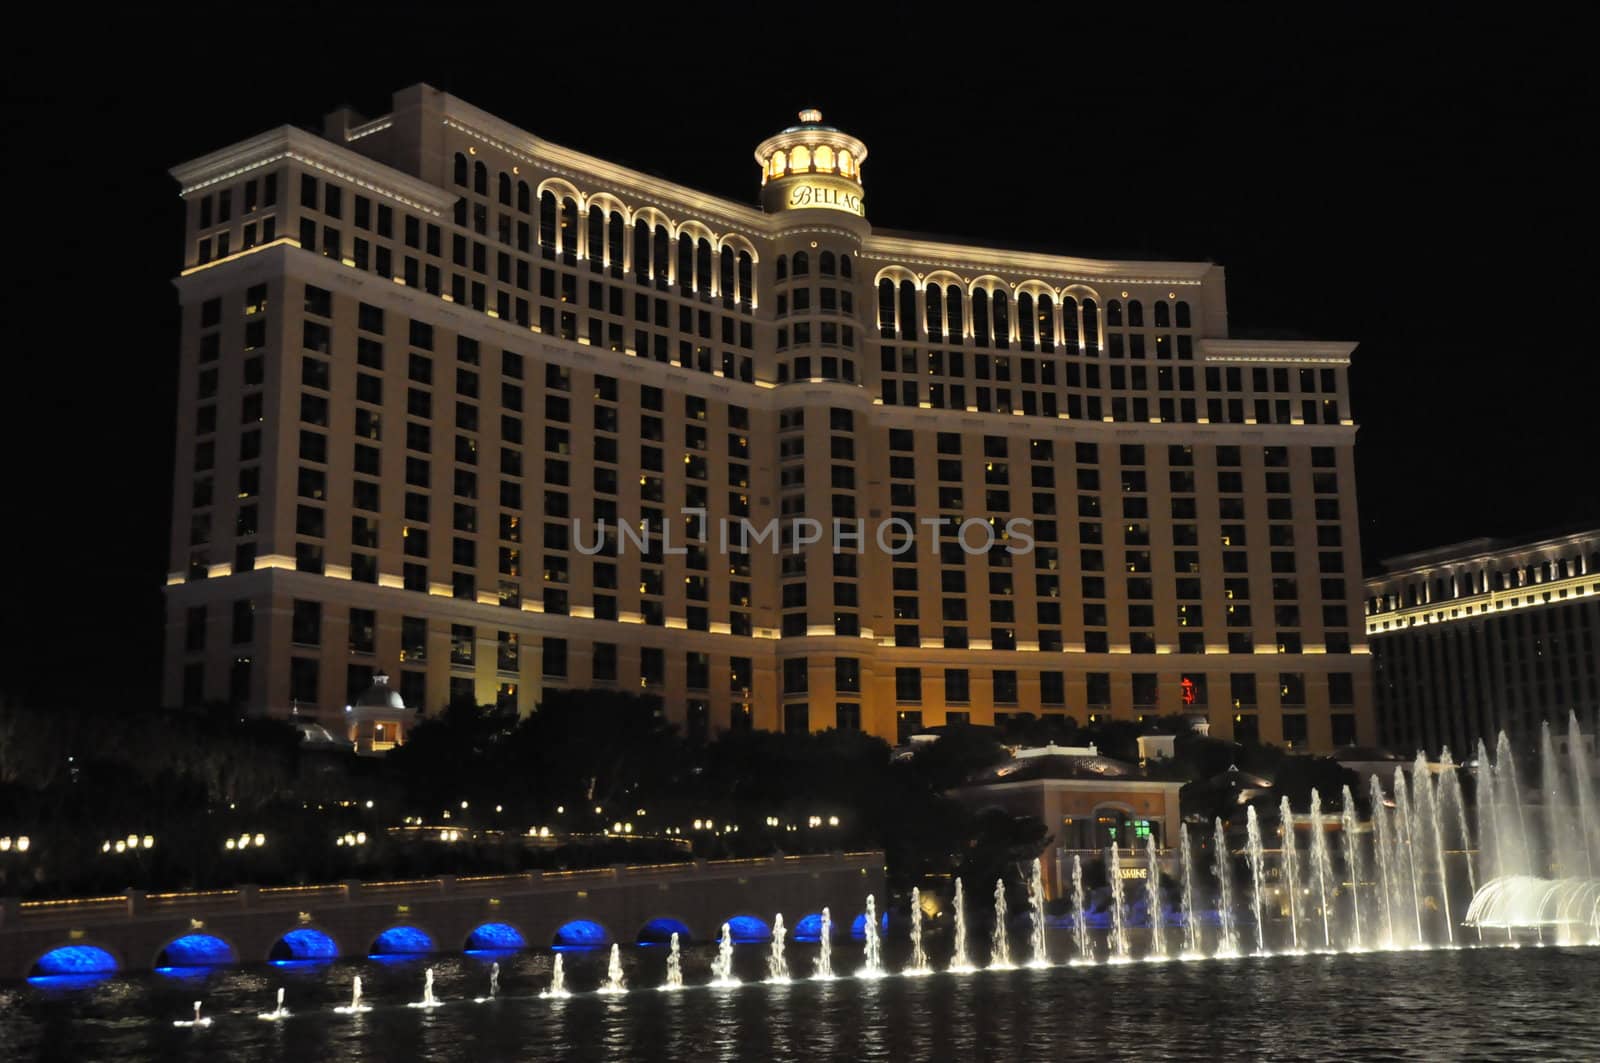 Bellagio Hotel & Casino Fountains by sainaniritu